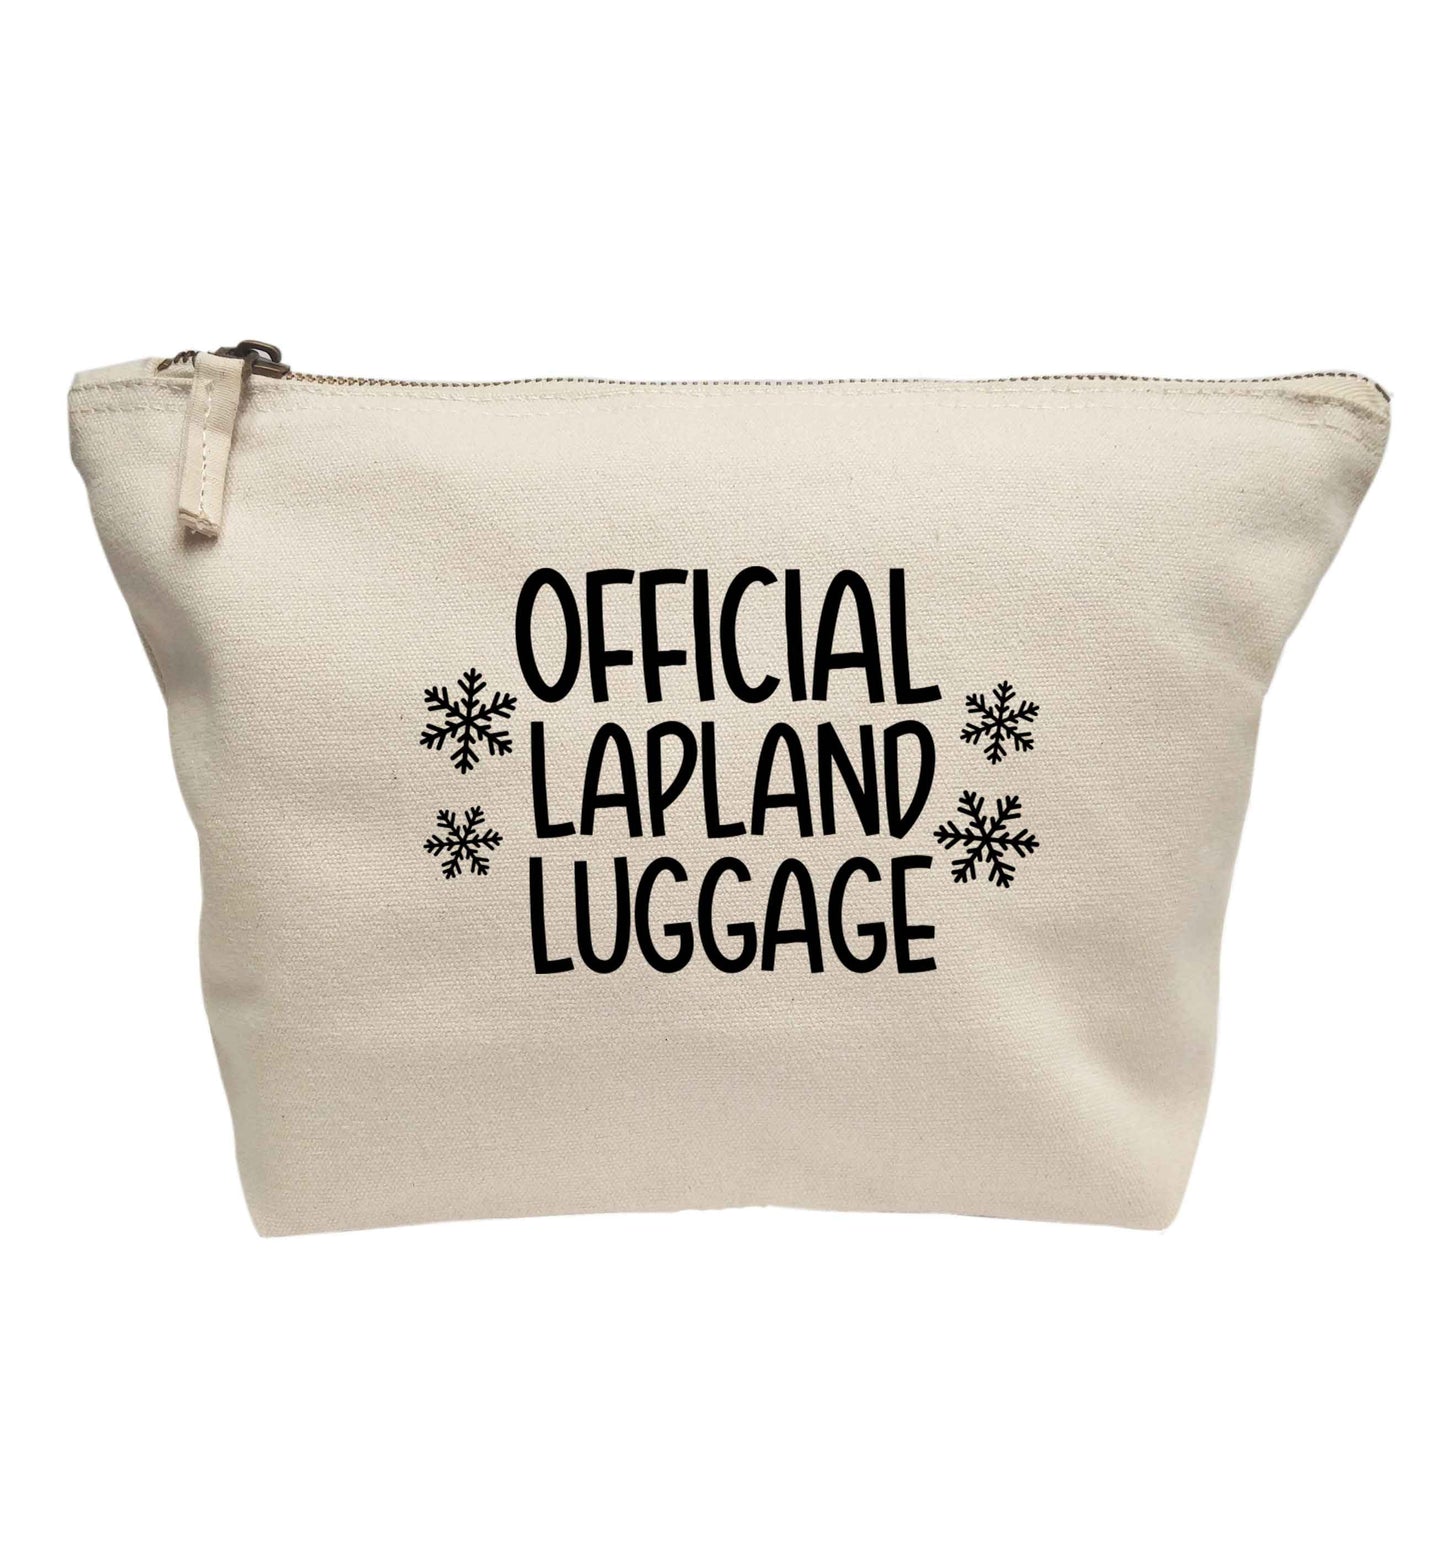 Official Lapland luggage | Makeup / wash bag